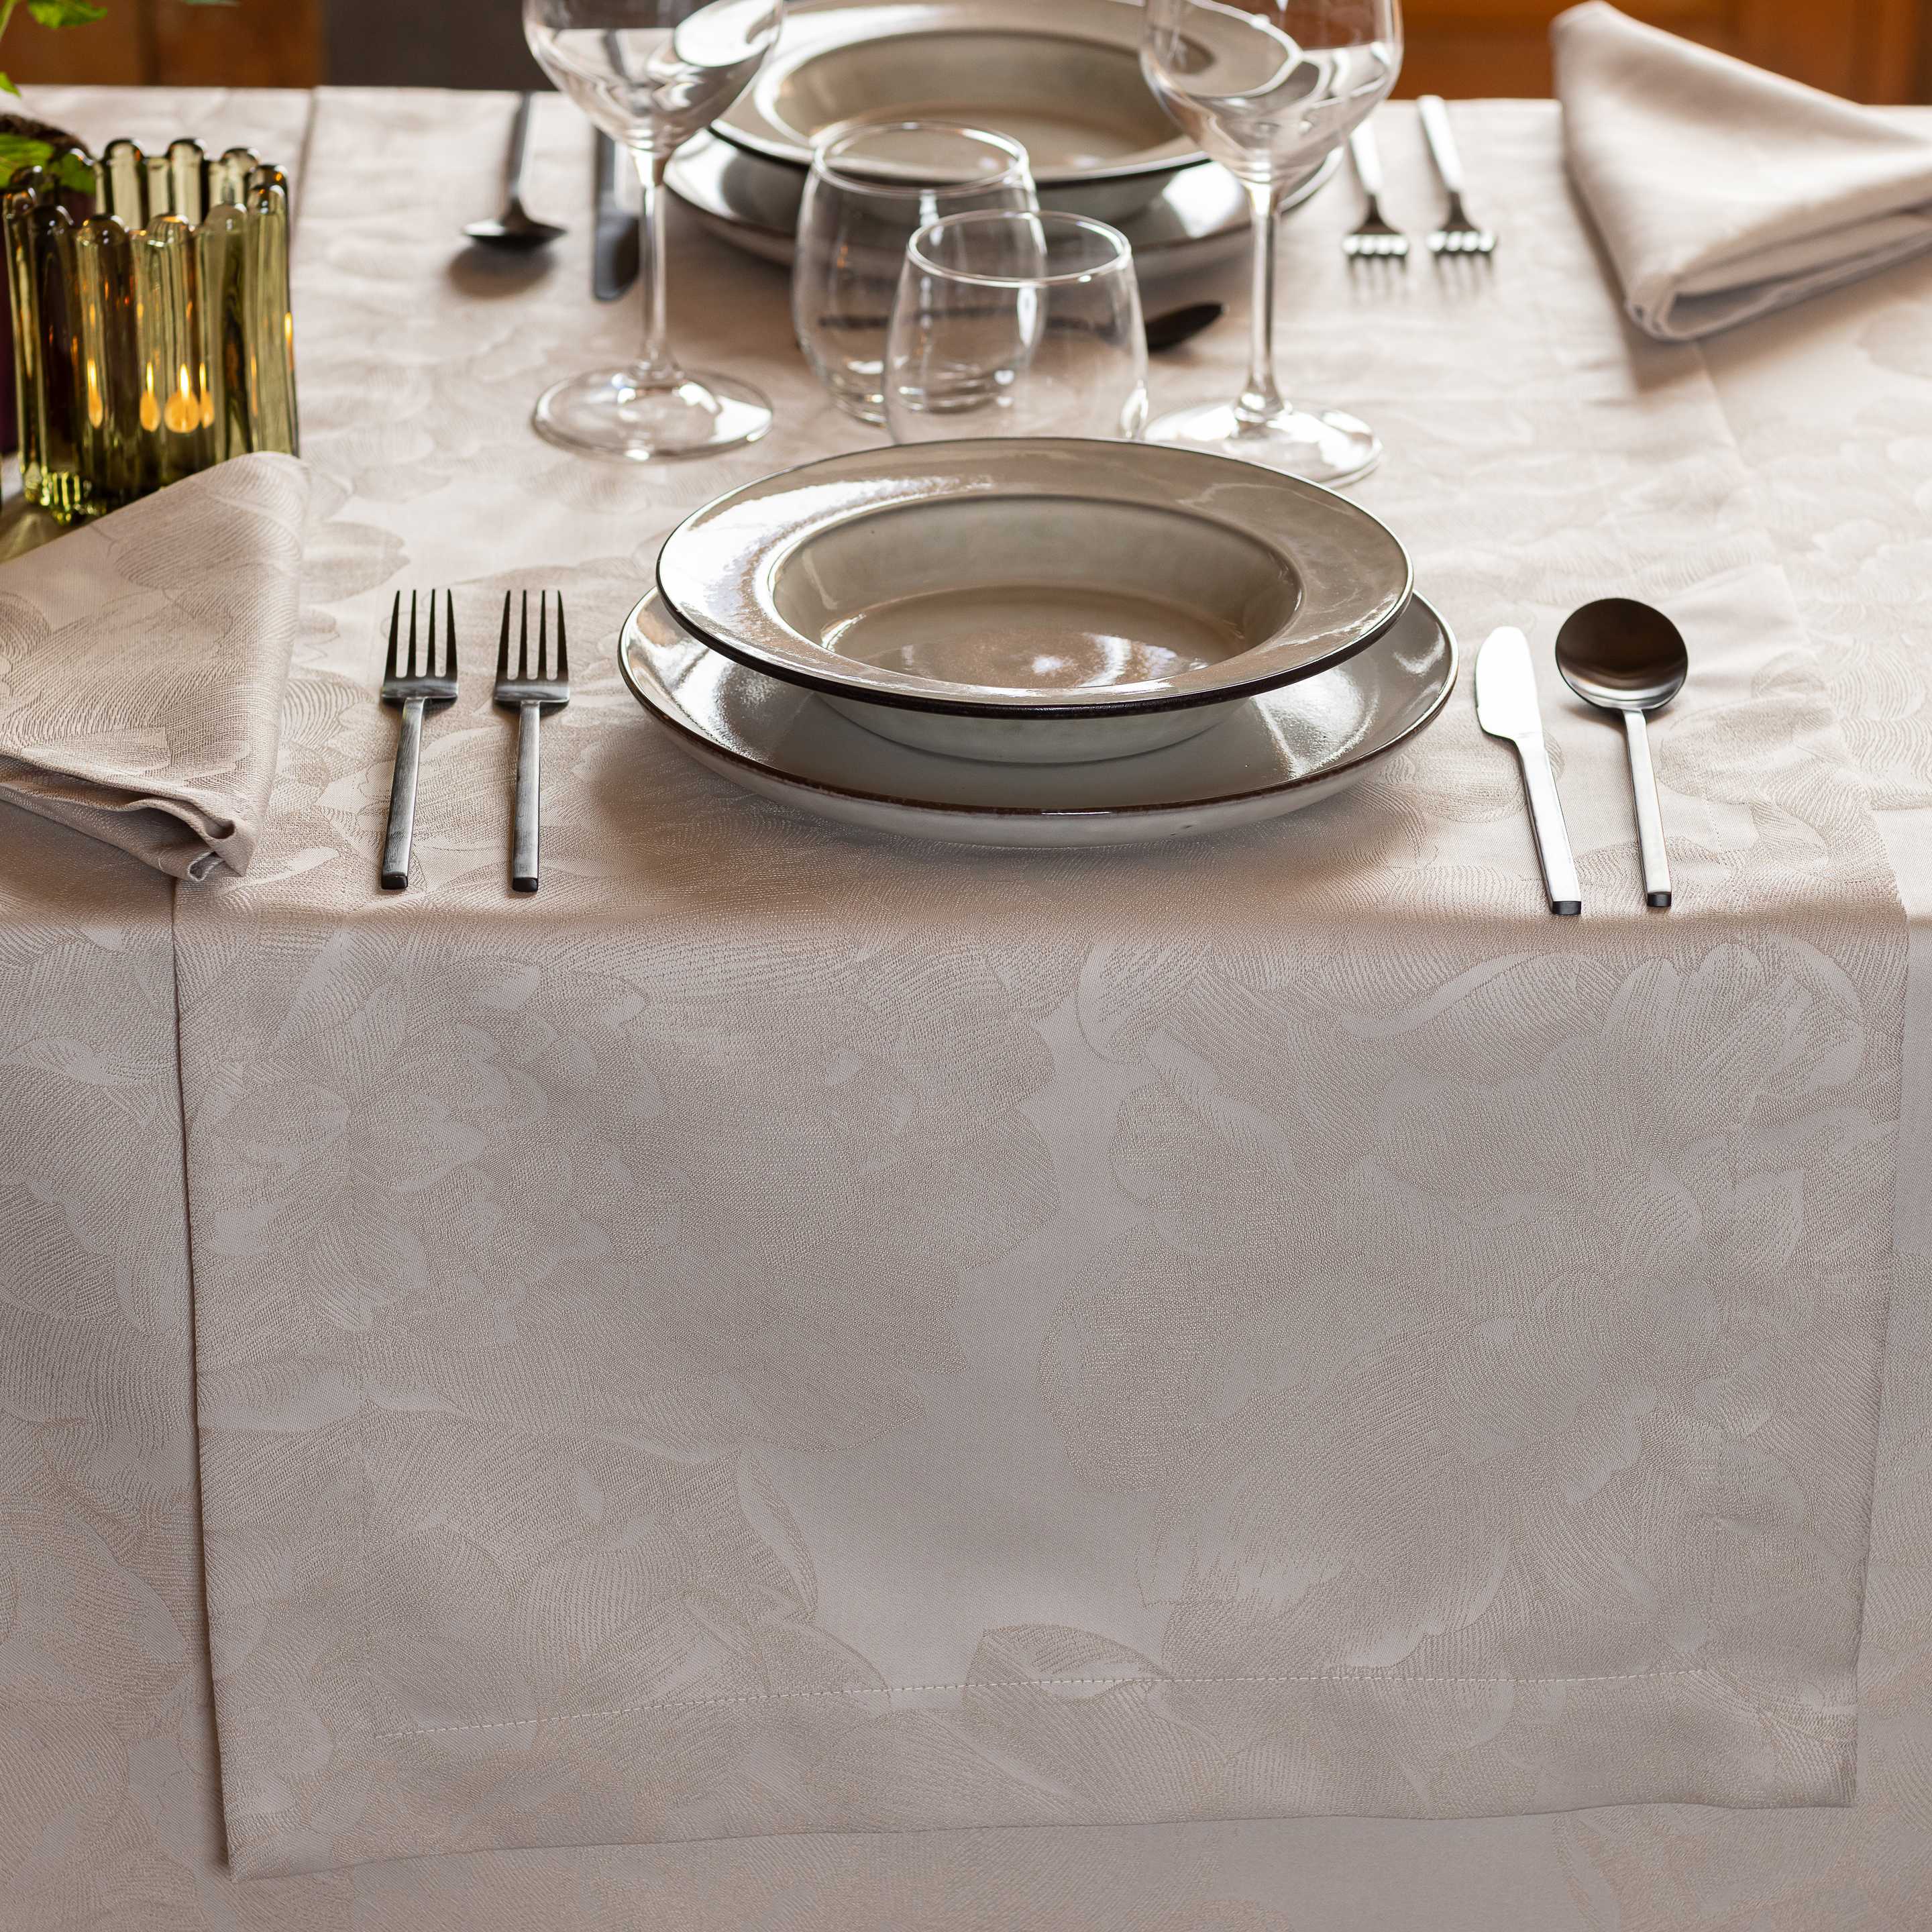 Runner da tavolo eleganti per impreziosire la sala da pranzo